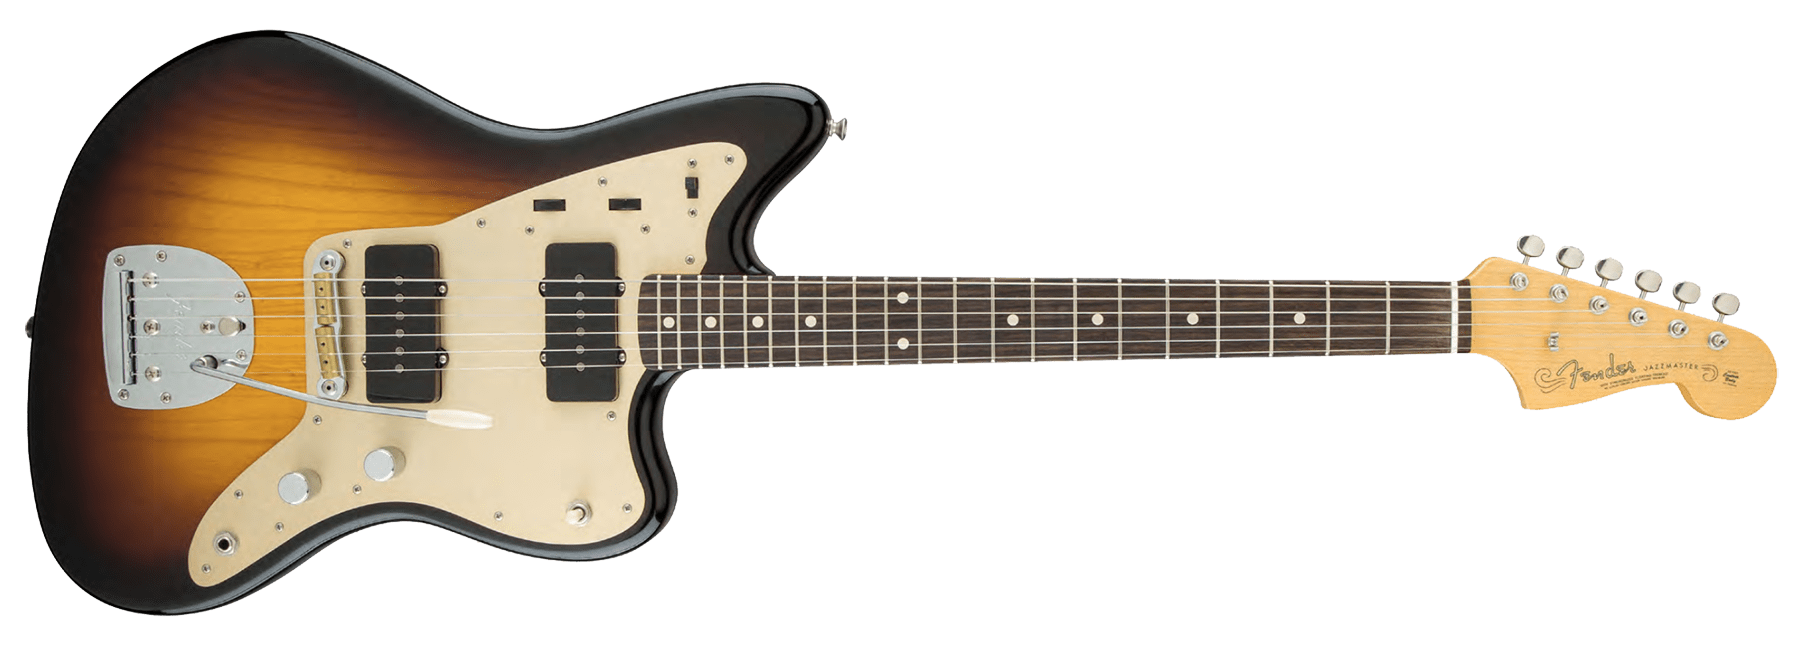 Fender Custom Shop - Finish Packages